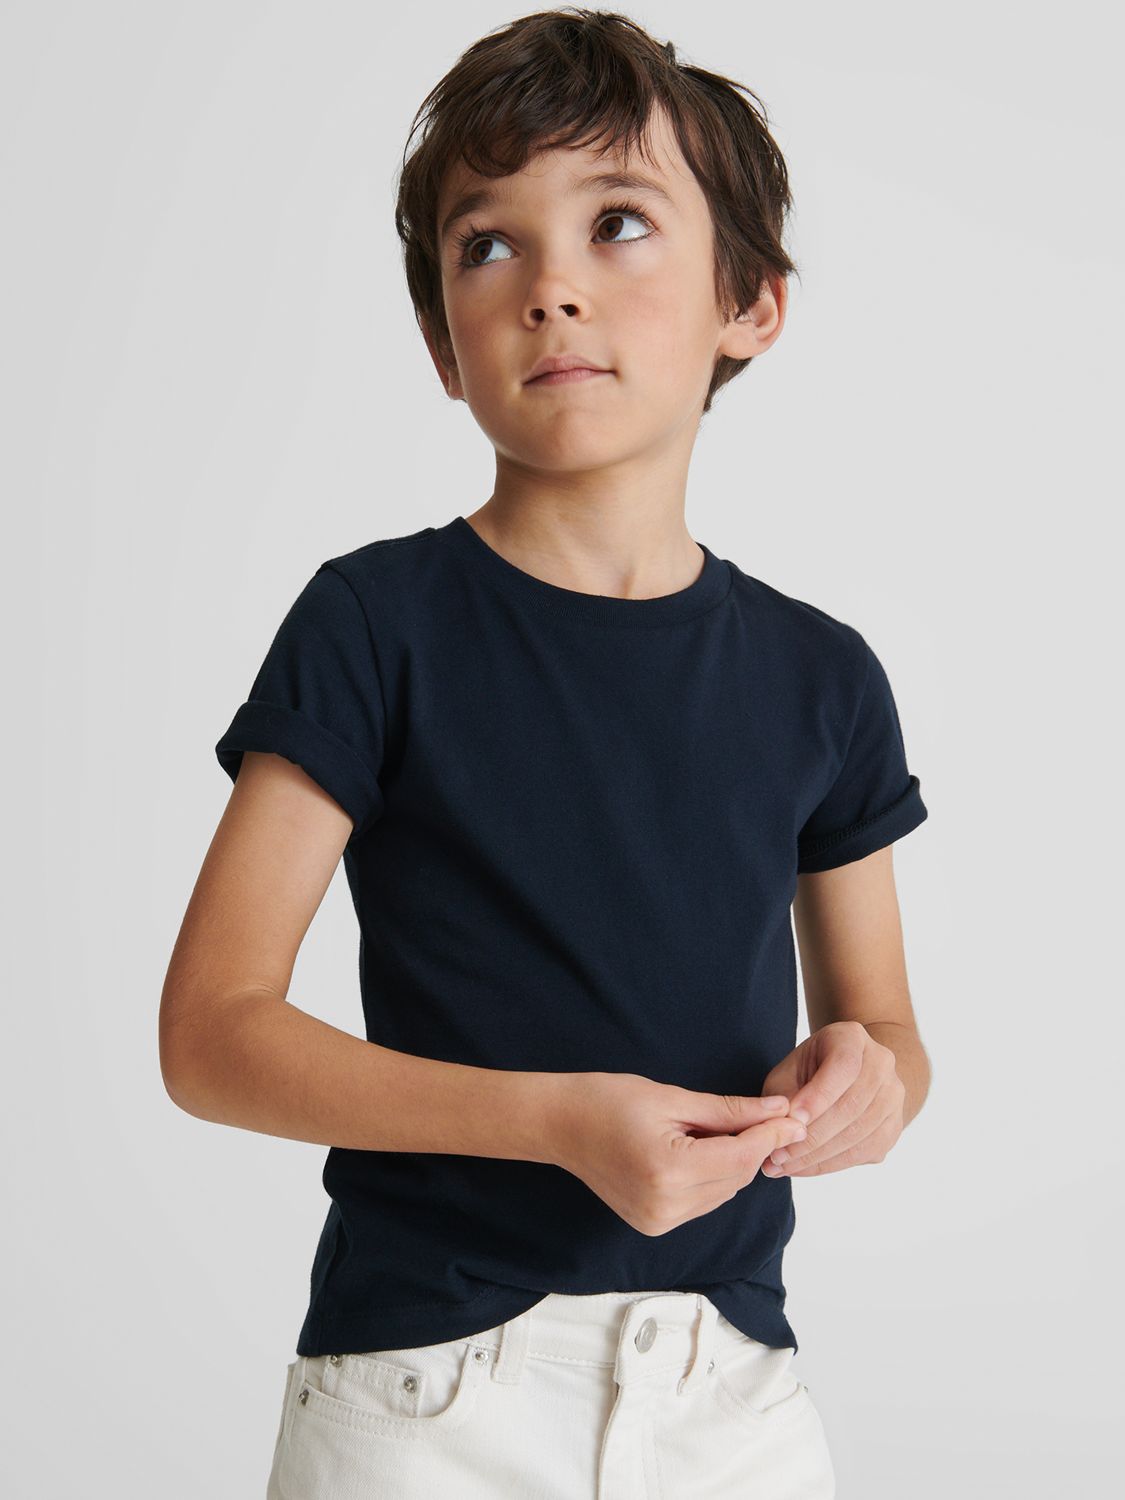 Reiss Kids' Bless Turn Up Sleeve T-Shirt, Navy at John Lewis & Partners